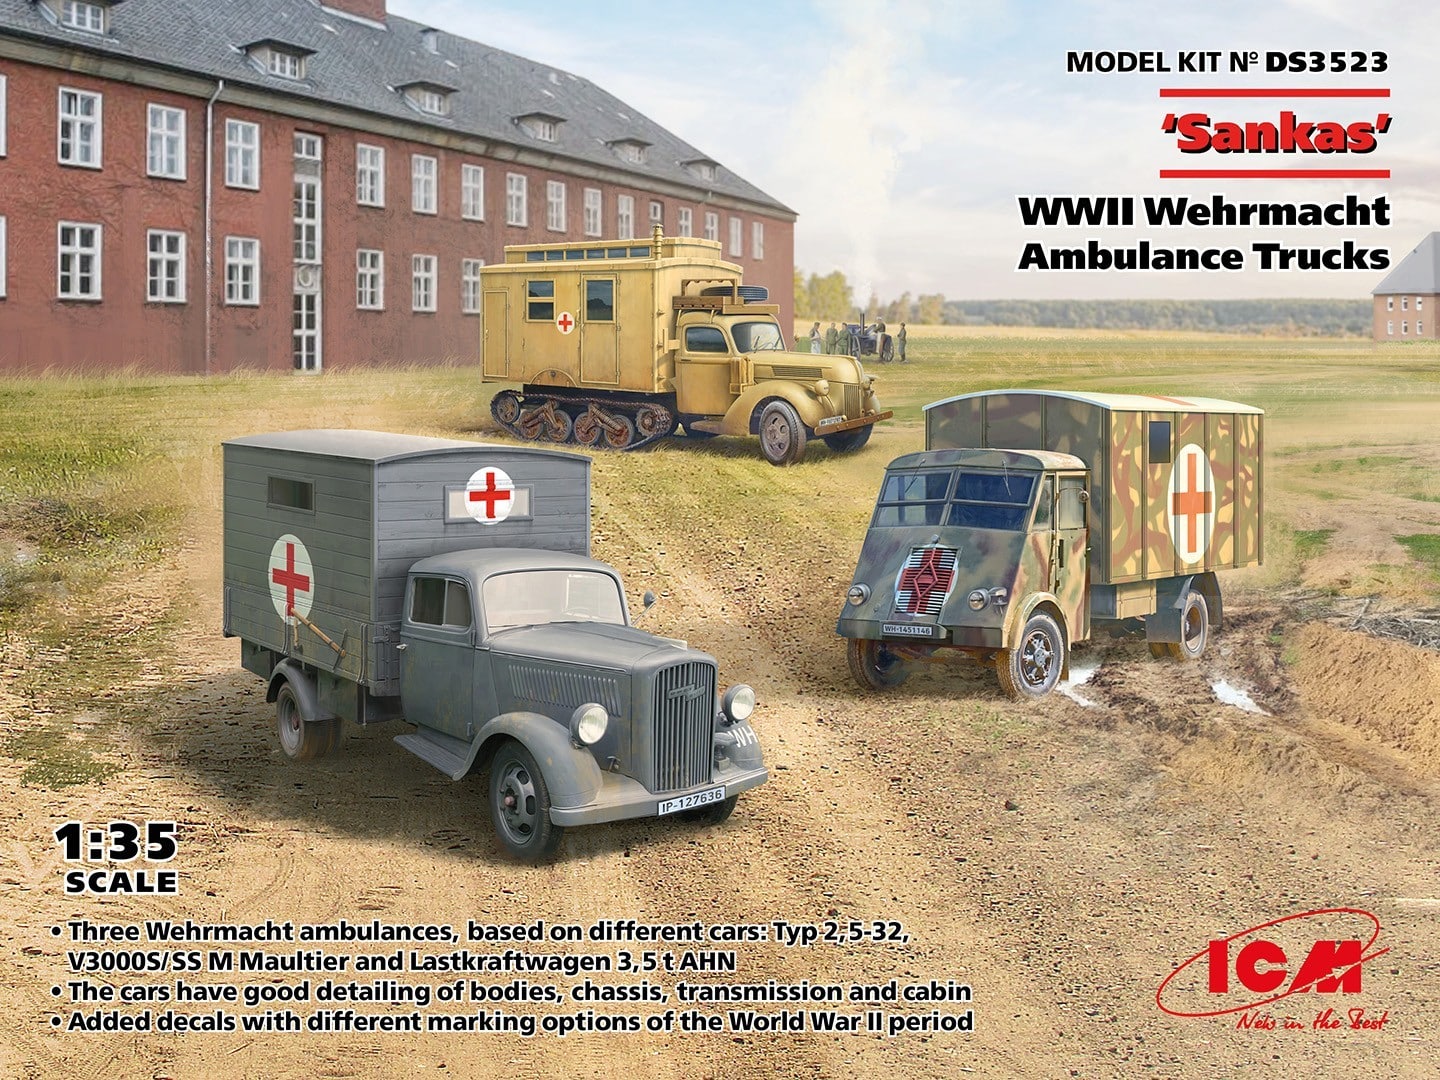 SOON ON SALE! ‘Sankas’ WWII Wehrmacht Ambulance Trucks